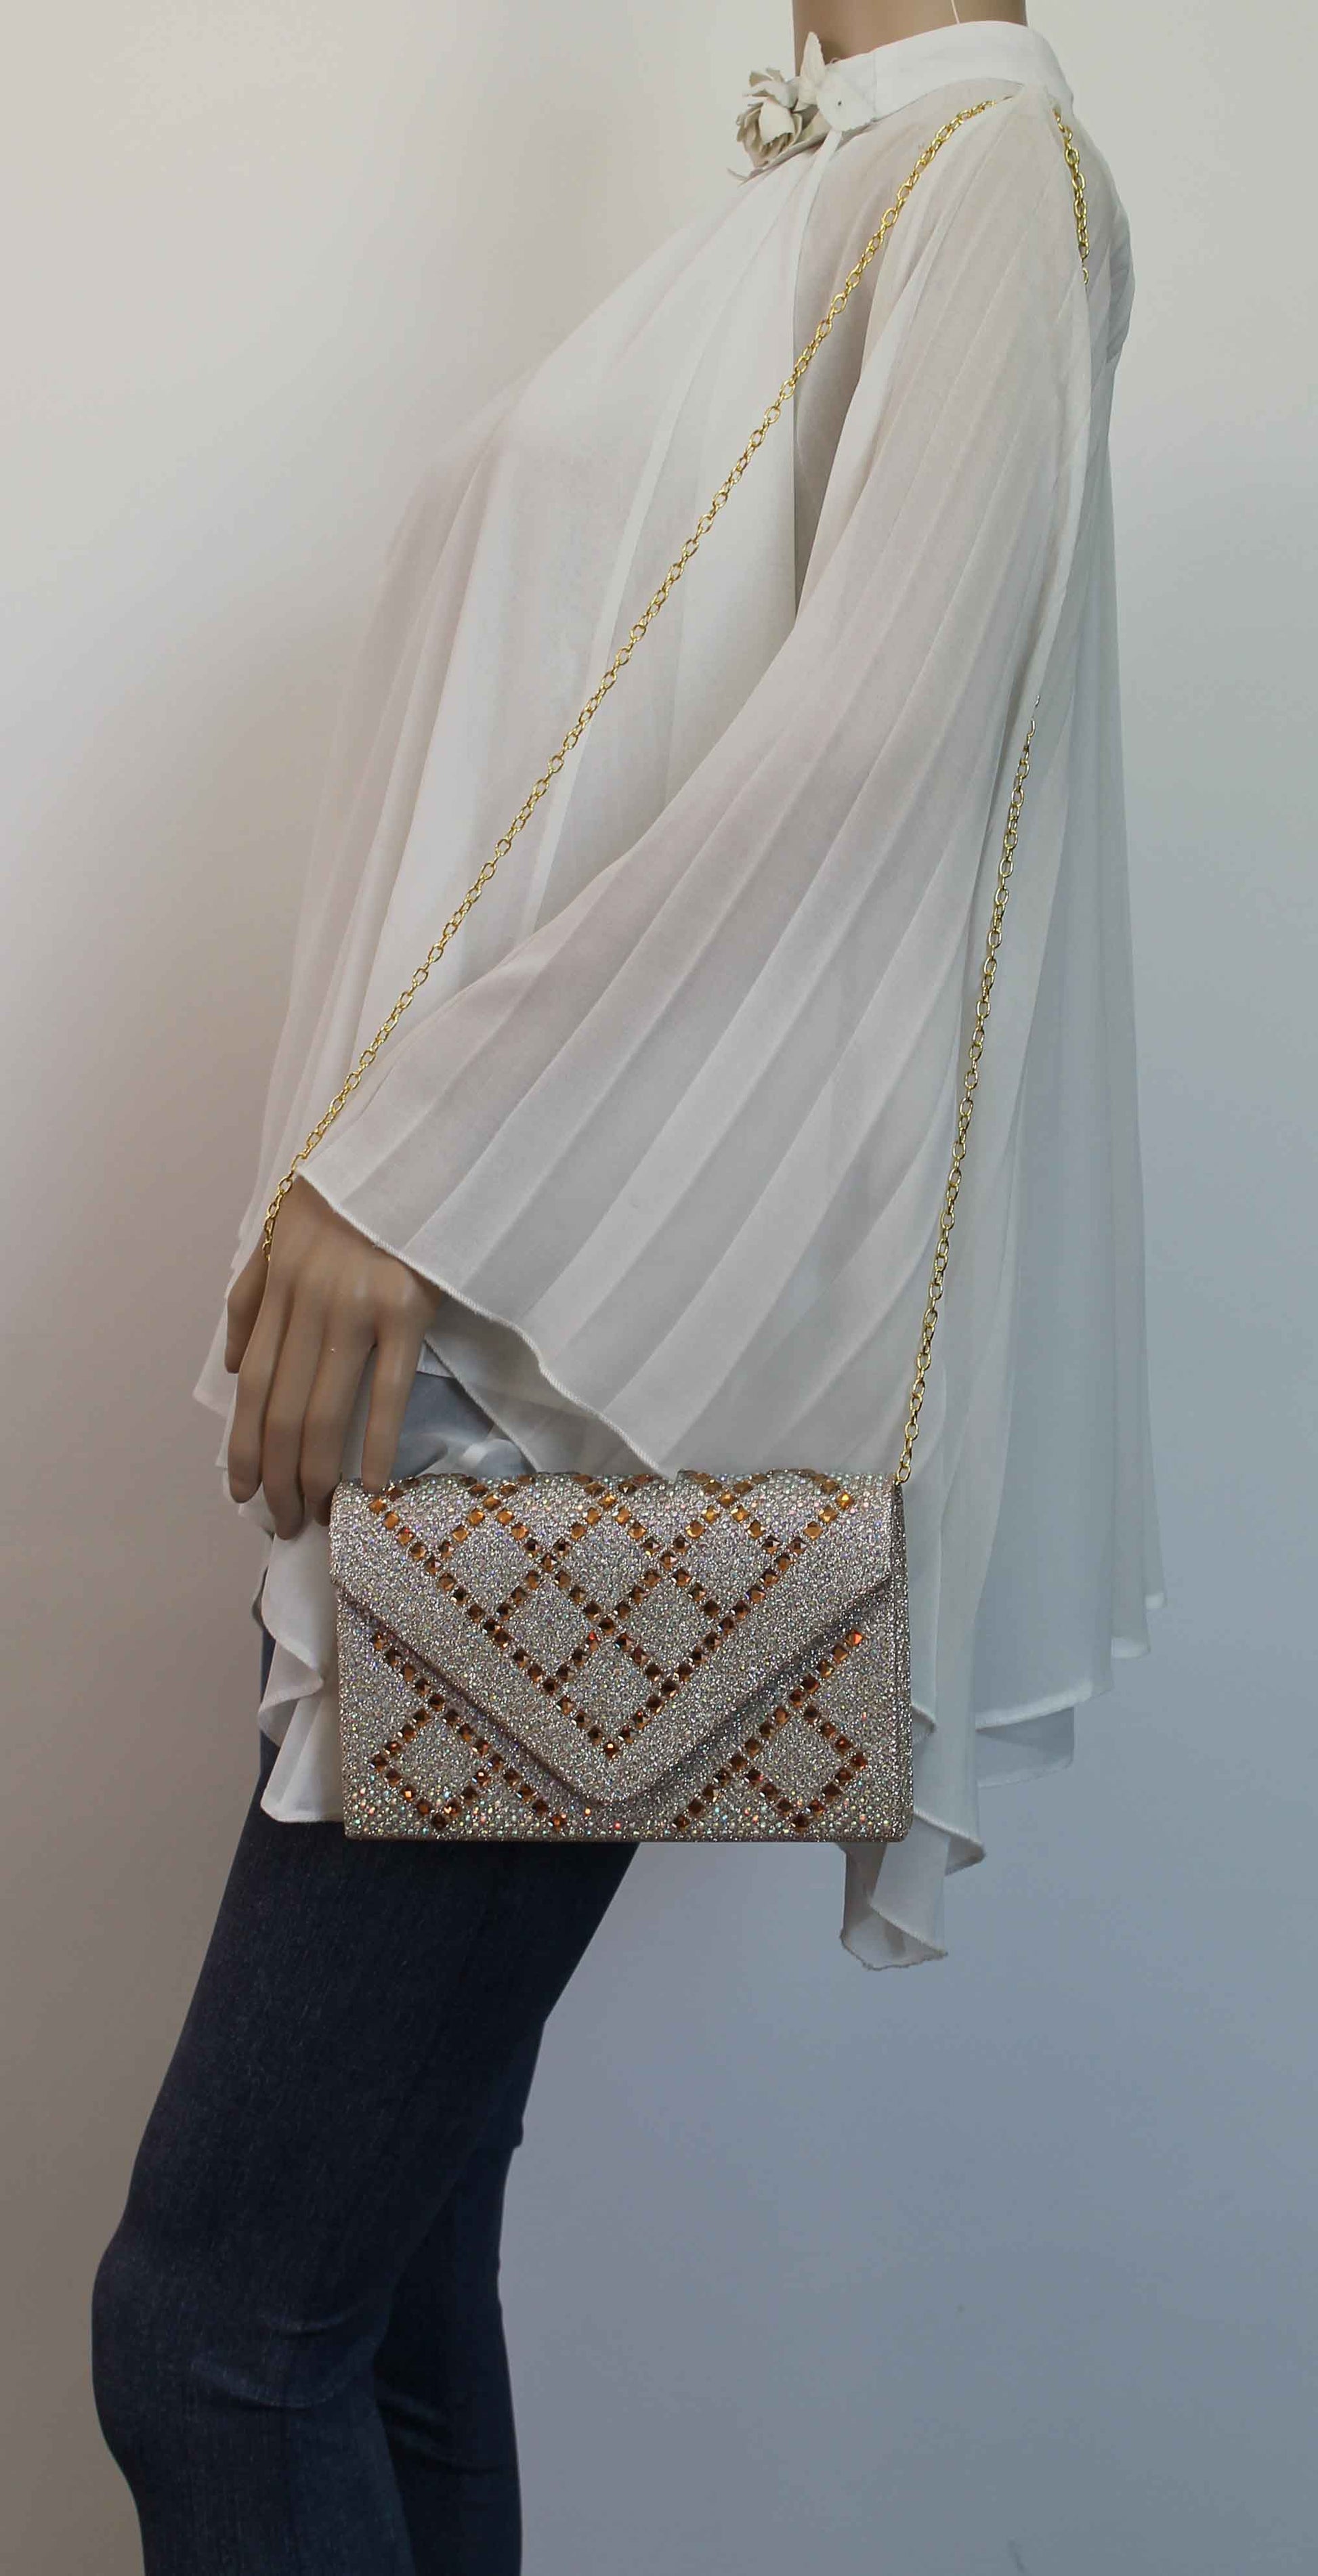 SWANKYSWANS Bethany Diamante Clutch Bag Gold Cute Cheap Clutch Bag For Weddings School and Work